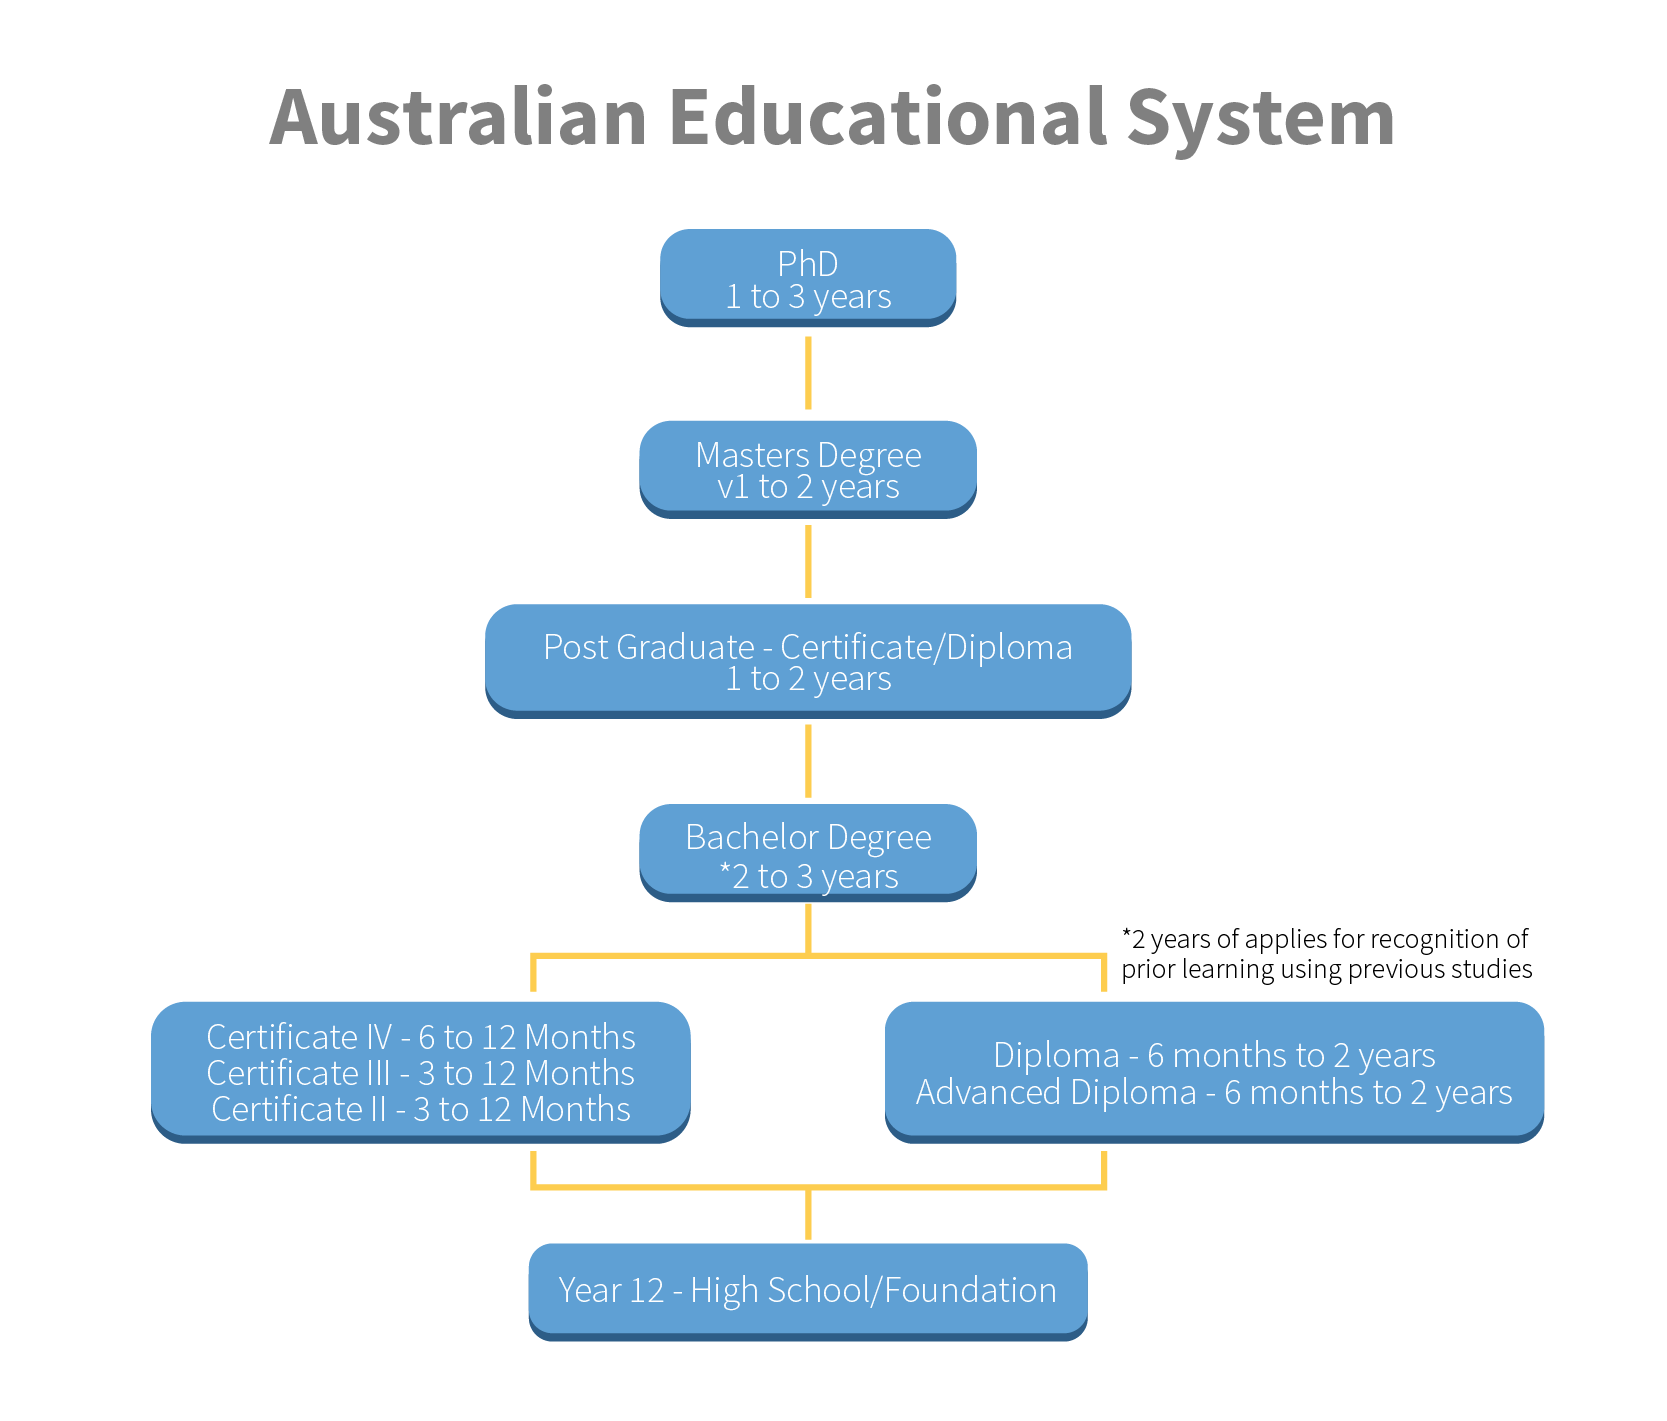 education system of australia